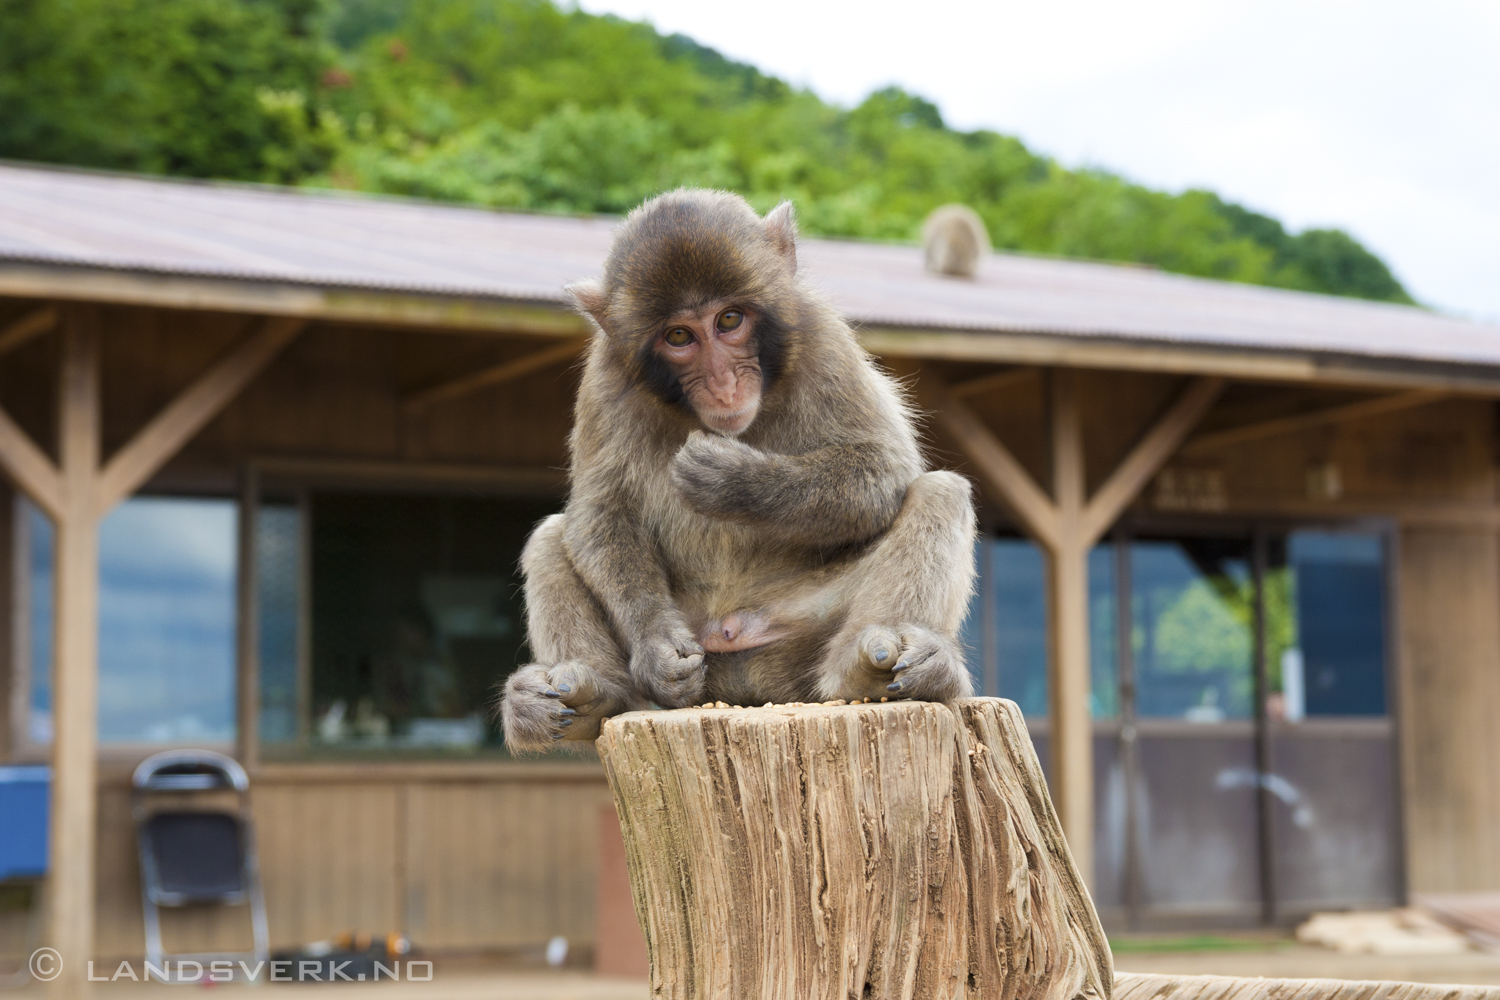 Iwatayama Monkey Park, Kyoto, Japan. 

(Canon EOS 450D, Sigma 17-50 F2.8)